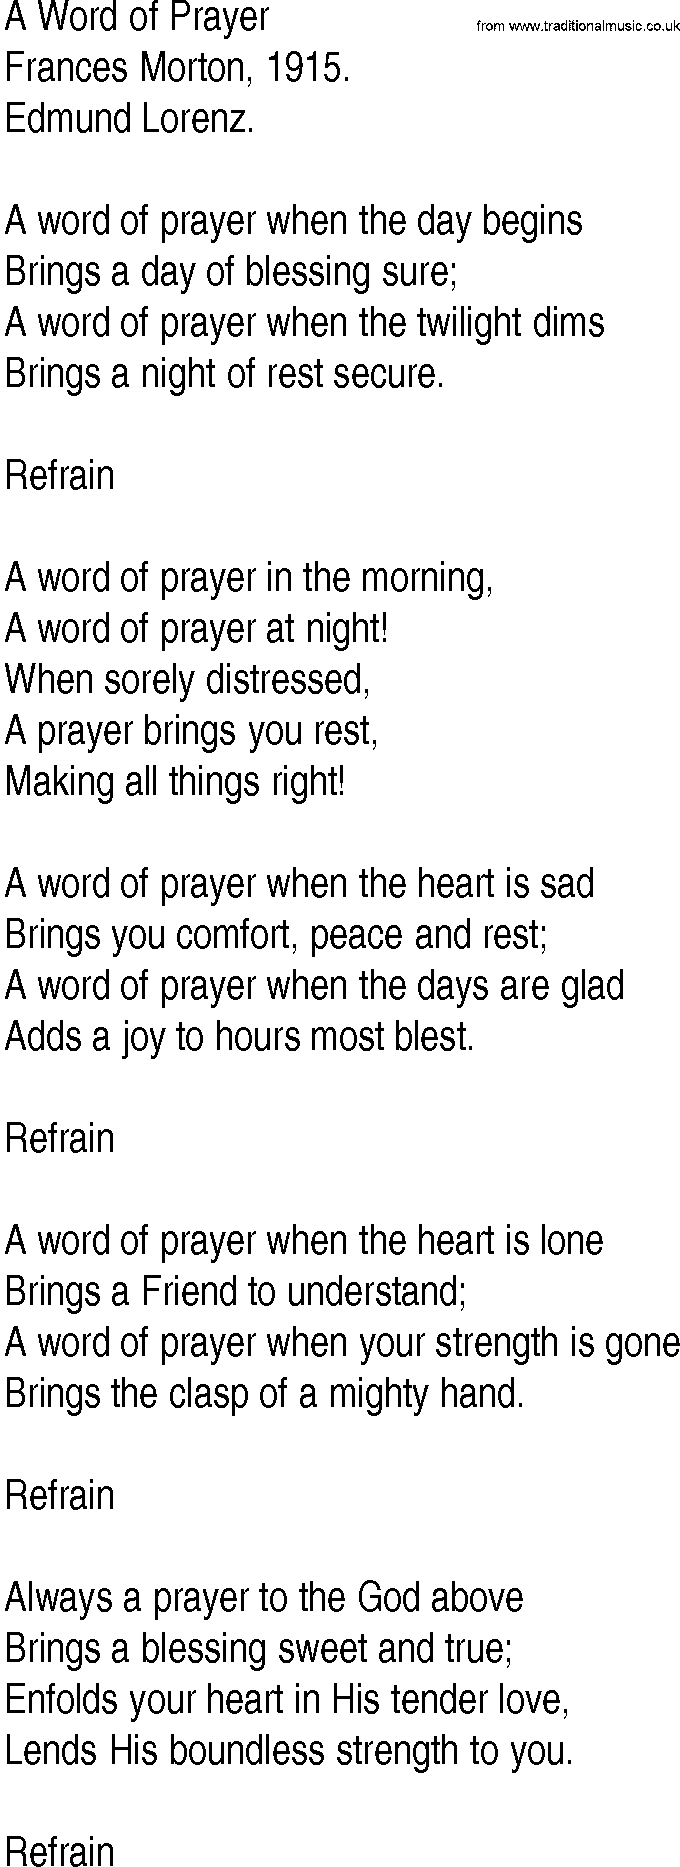 Hymn and Gospel Song: A Word of Prayer by Frances Morton lyrics